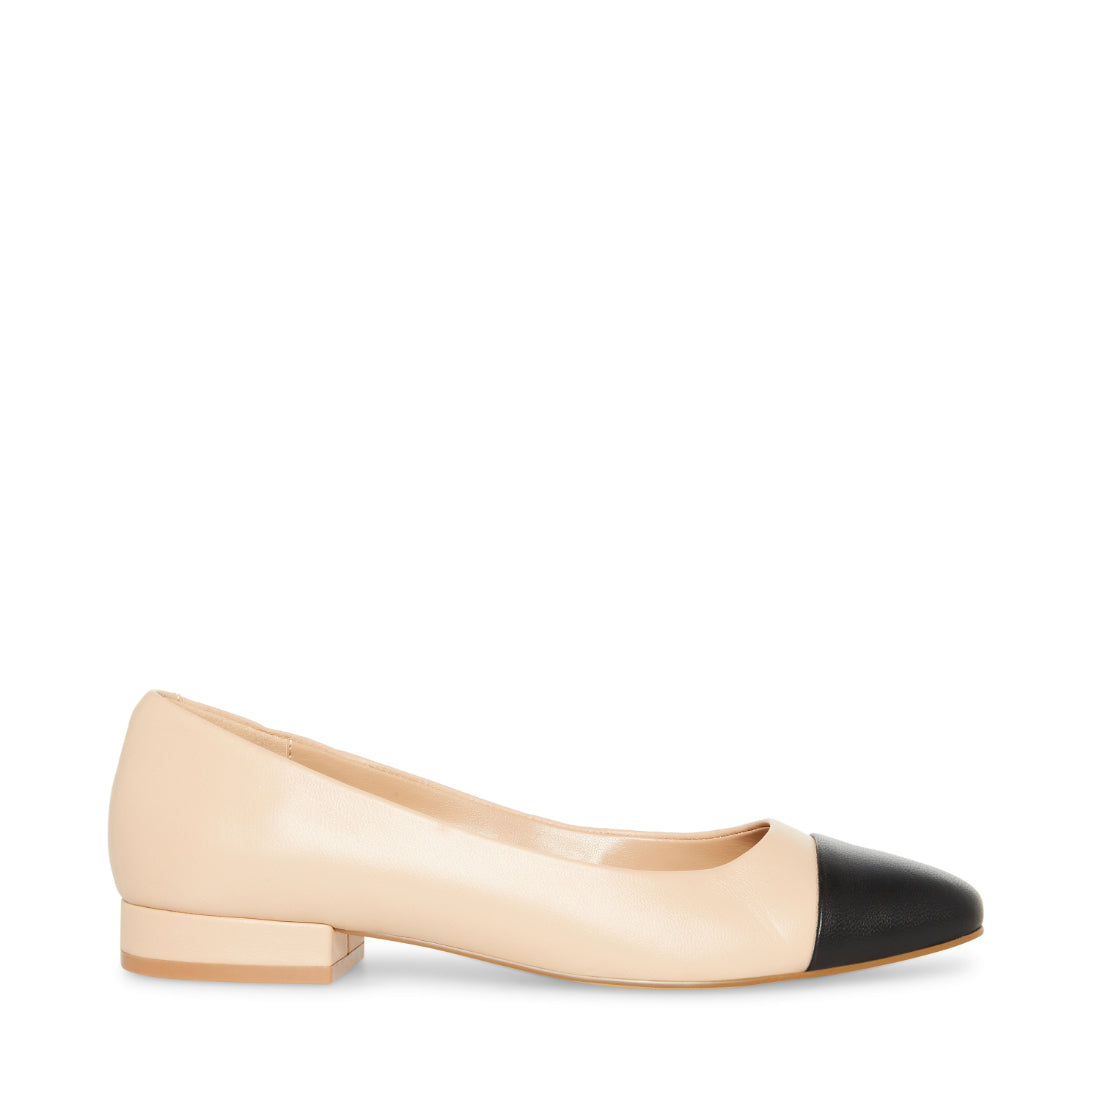 BLAIR Tan Leather Ballet Loafer Flats | Women's Designer Flats – Steve ...